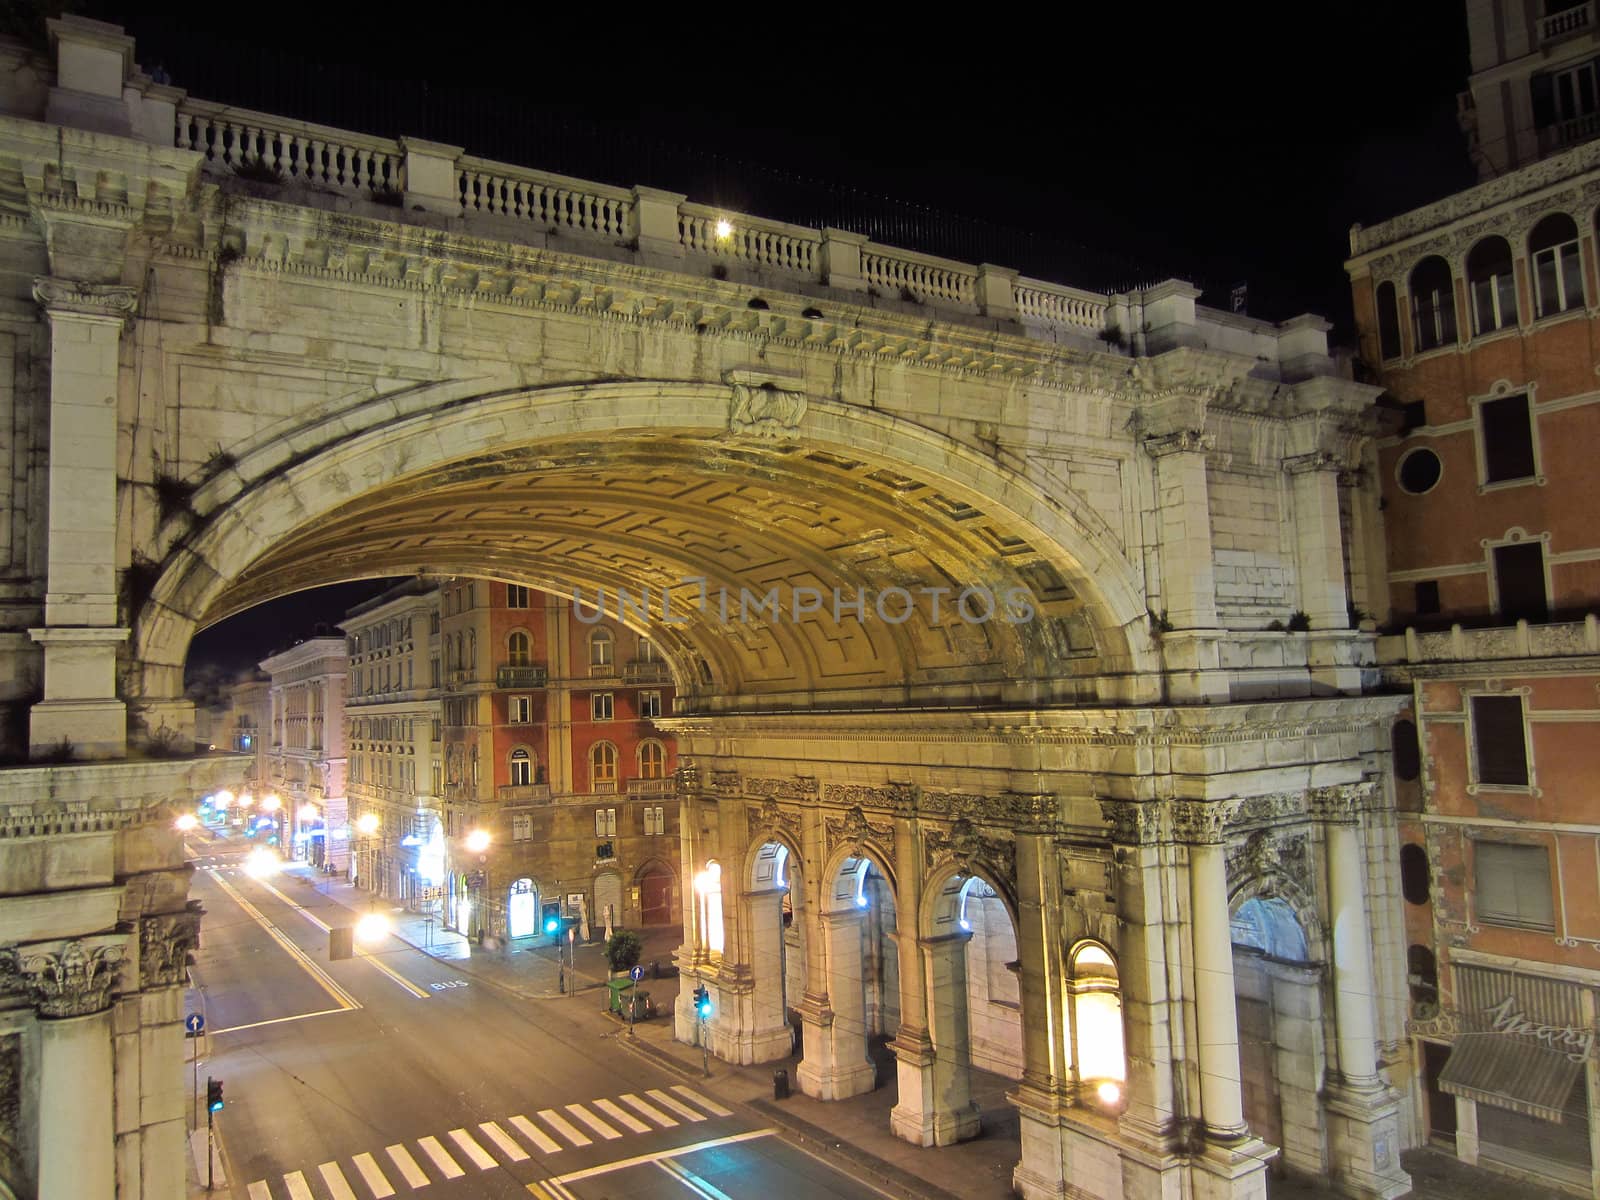 Night in Genoa, Italy by jol66